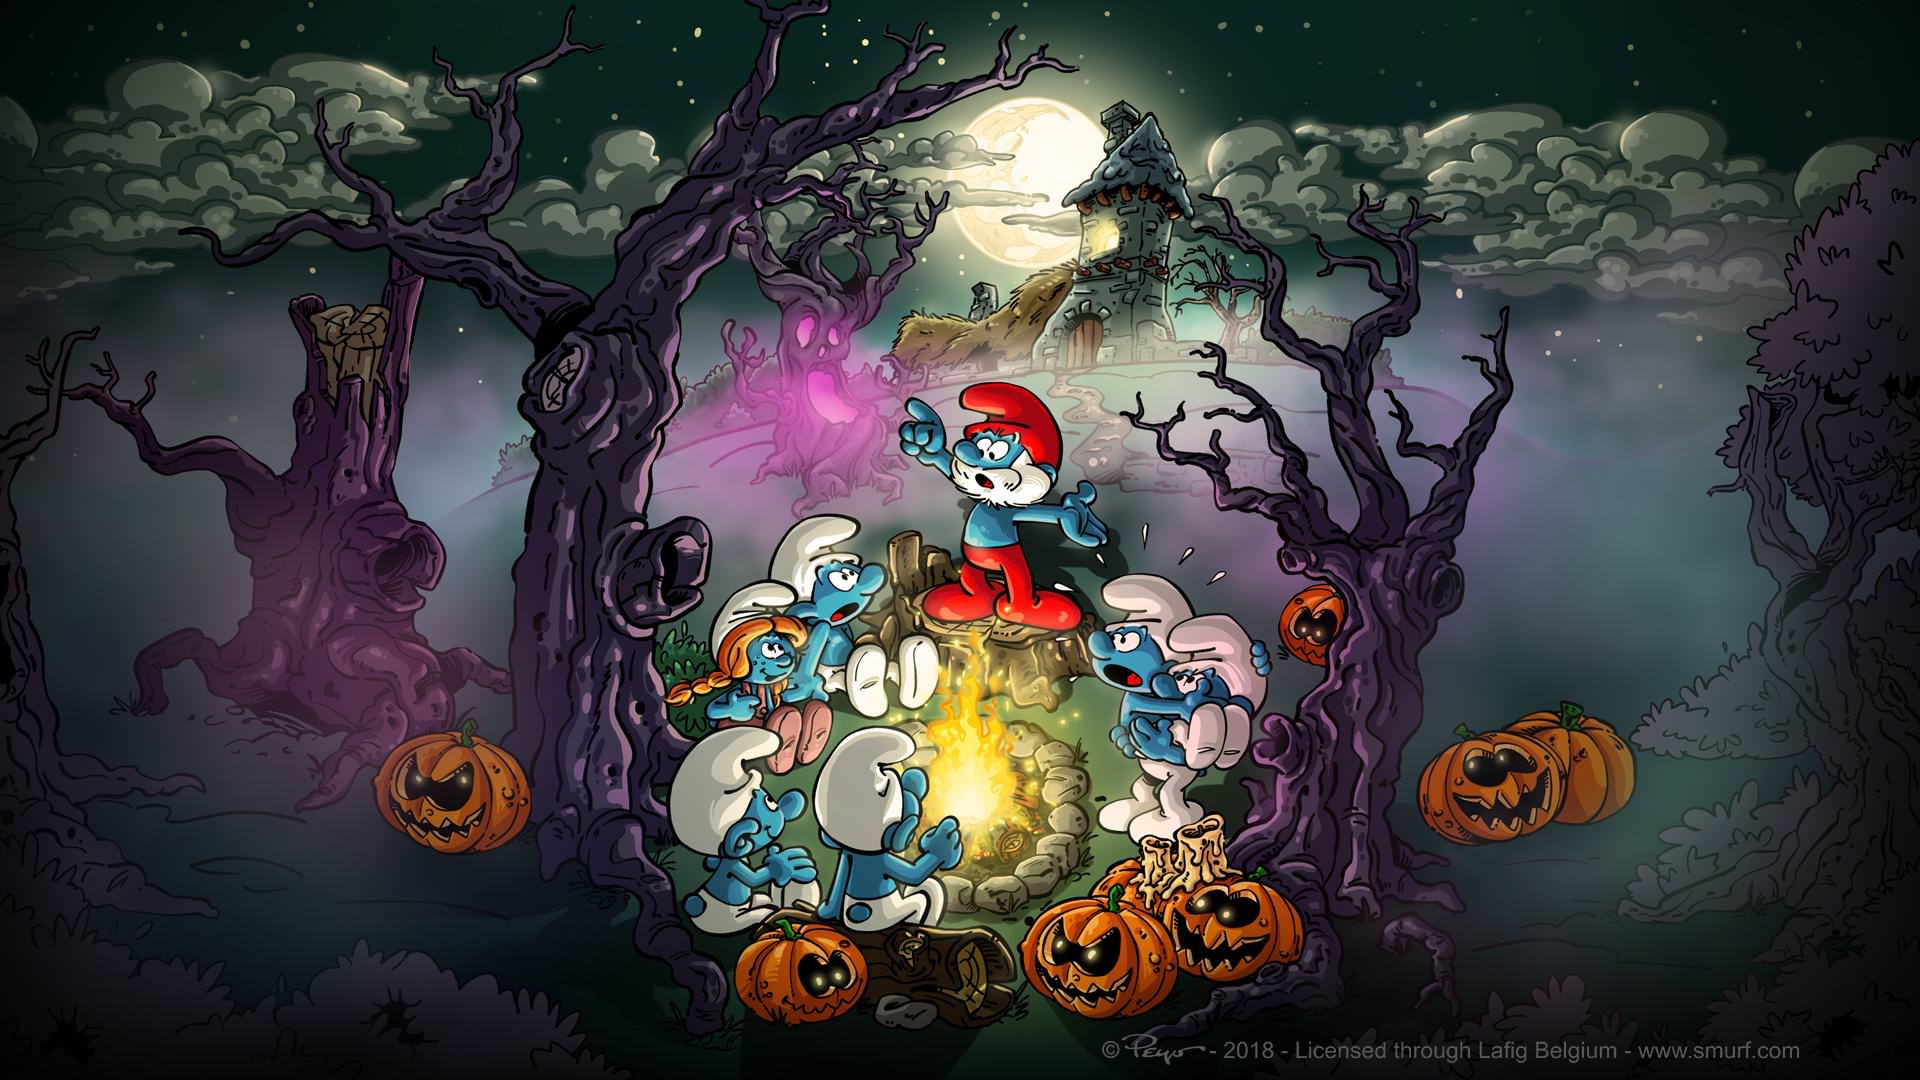 Get your original Smurfs' Village Halloween Wallpaper here!